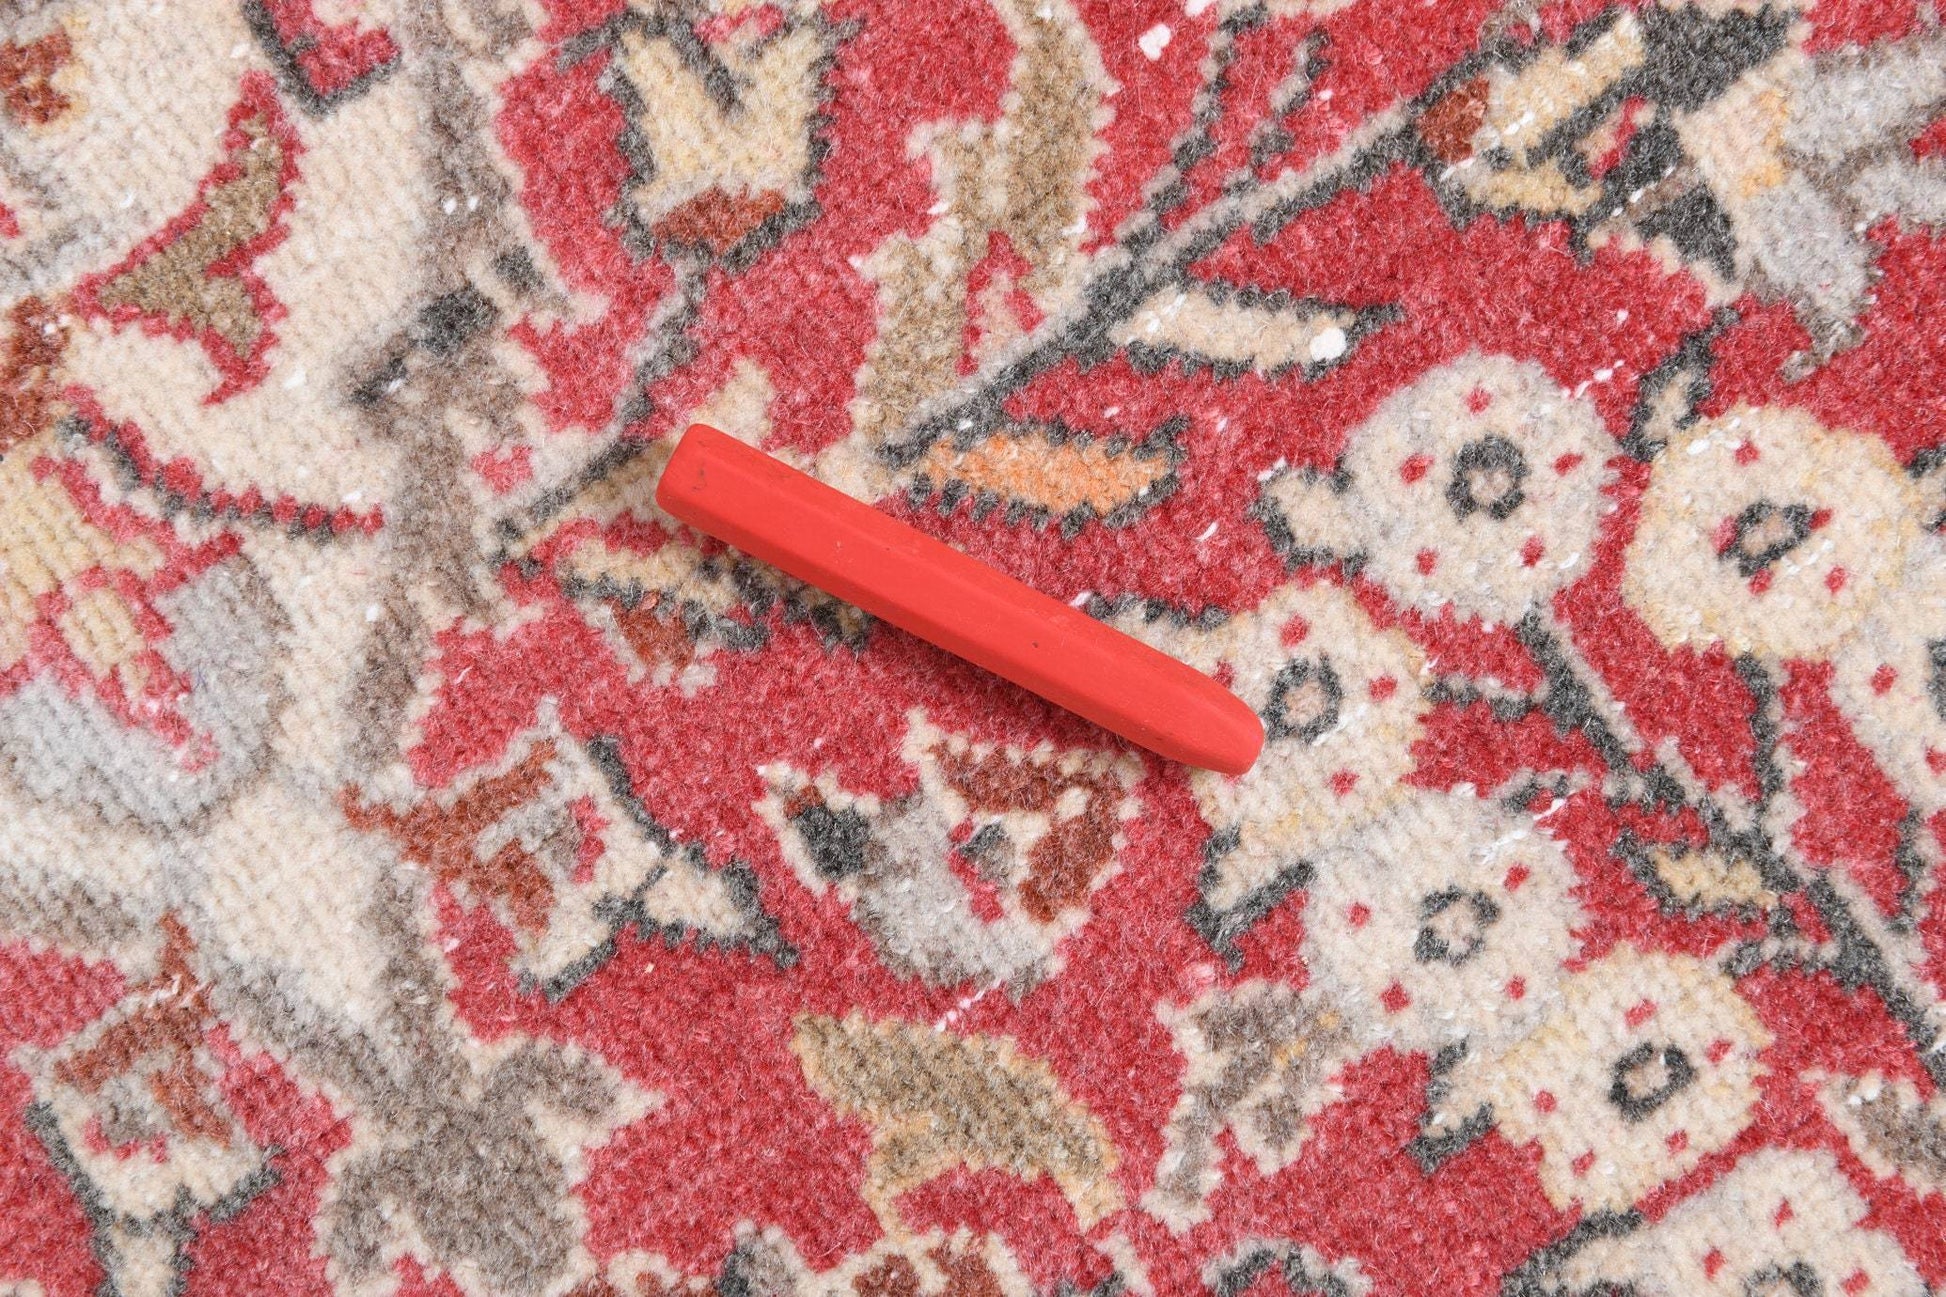 9' x 13' Red Vintage Persian Rug  |  RugReform